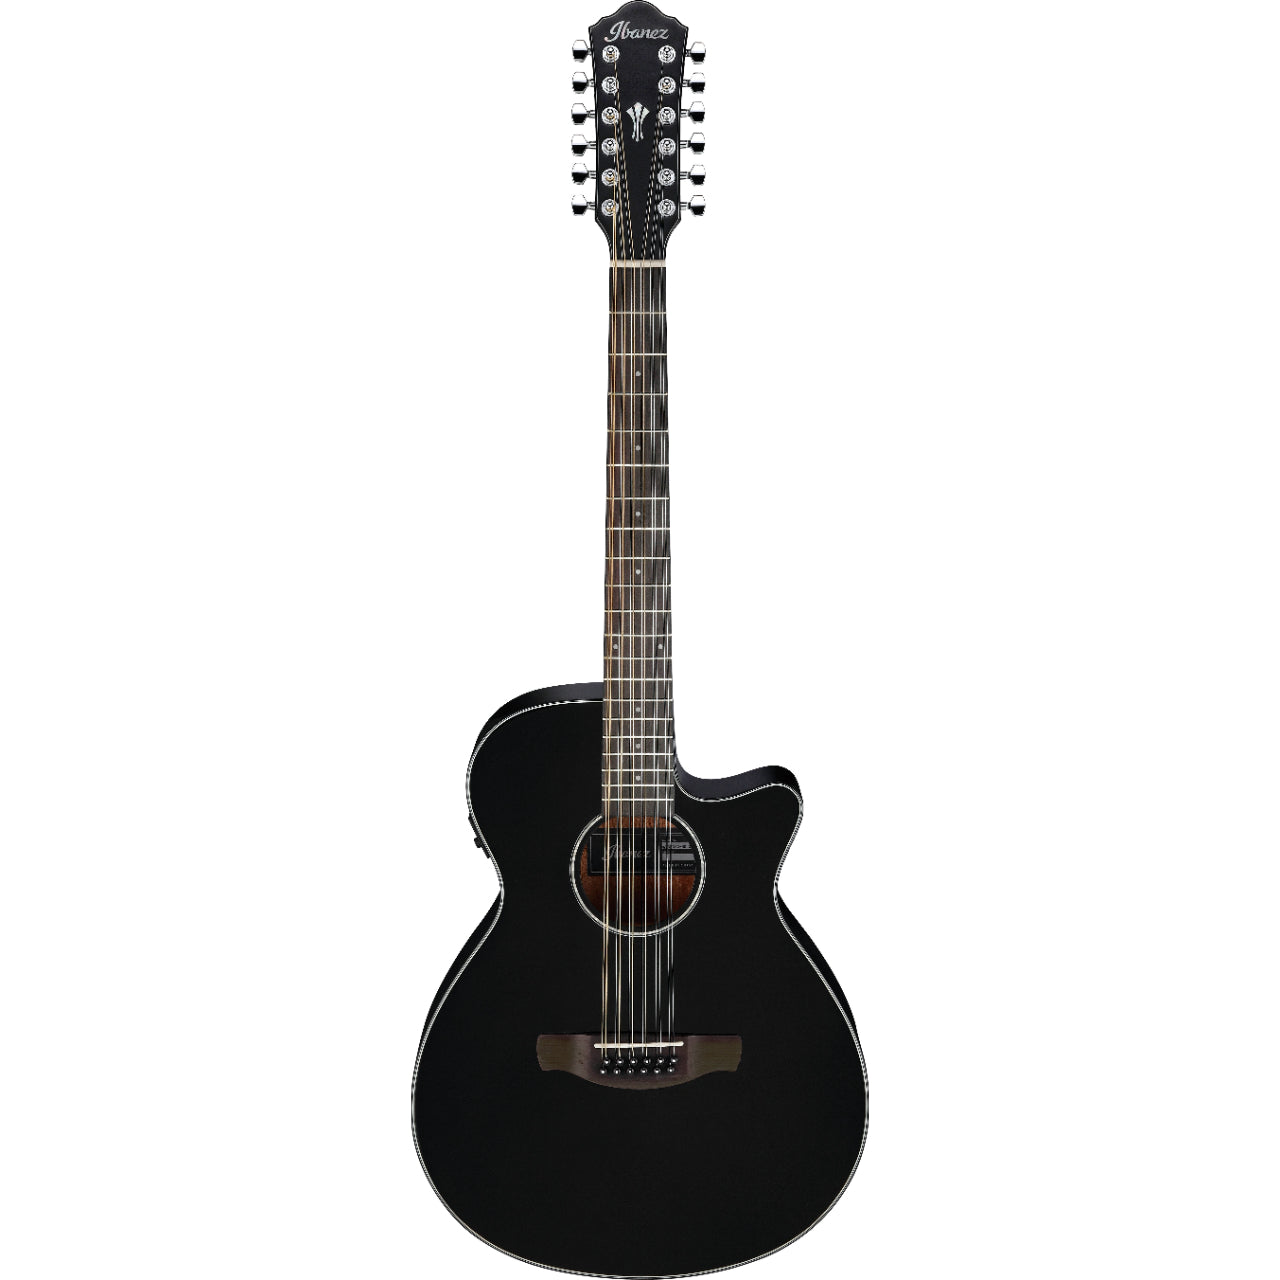 Ibanez AEG5012BK - AEG Body 12-String Acoustic Guitar - Black - Rich Tone, Comfortable Playability, Stage-Ready Design